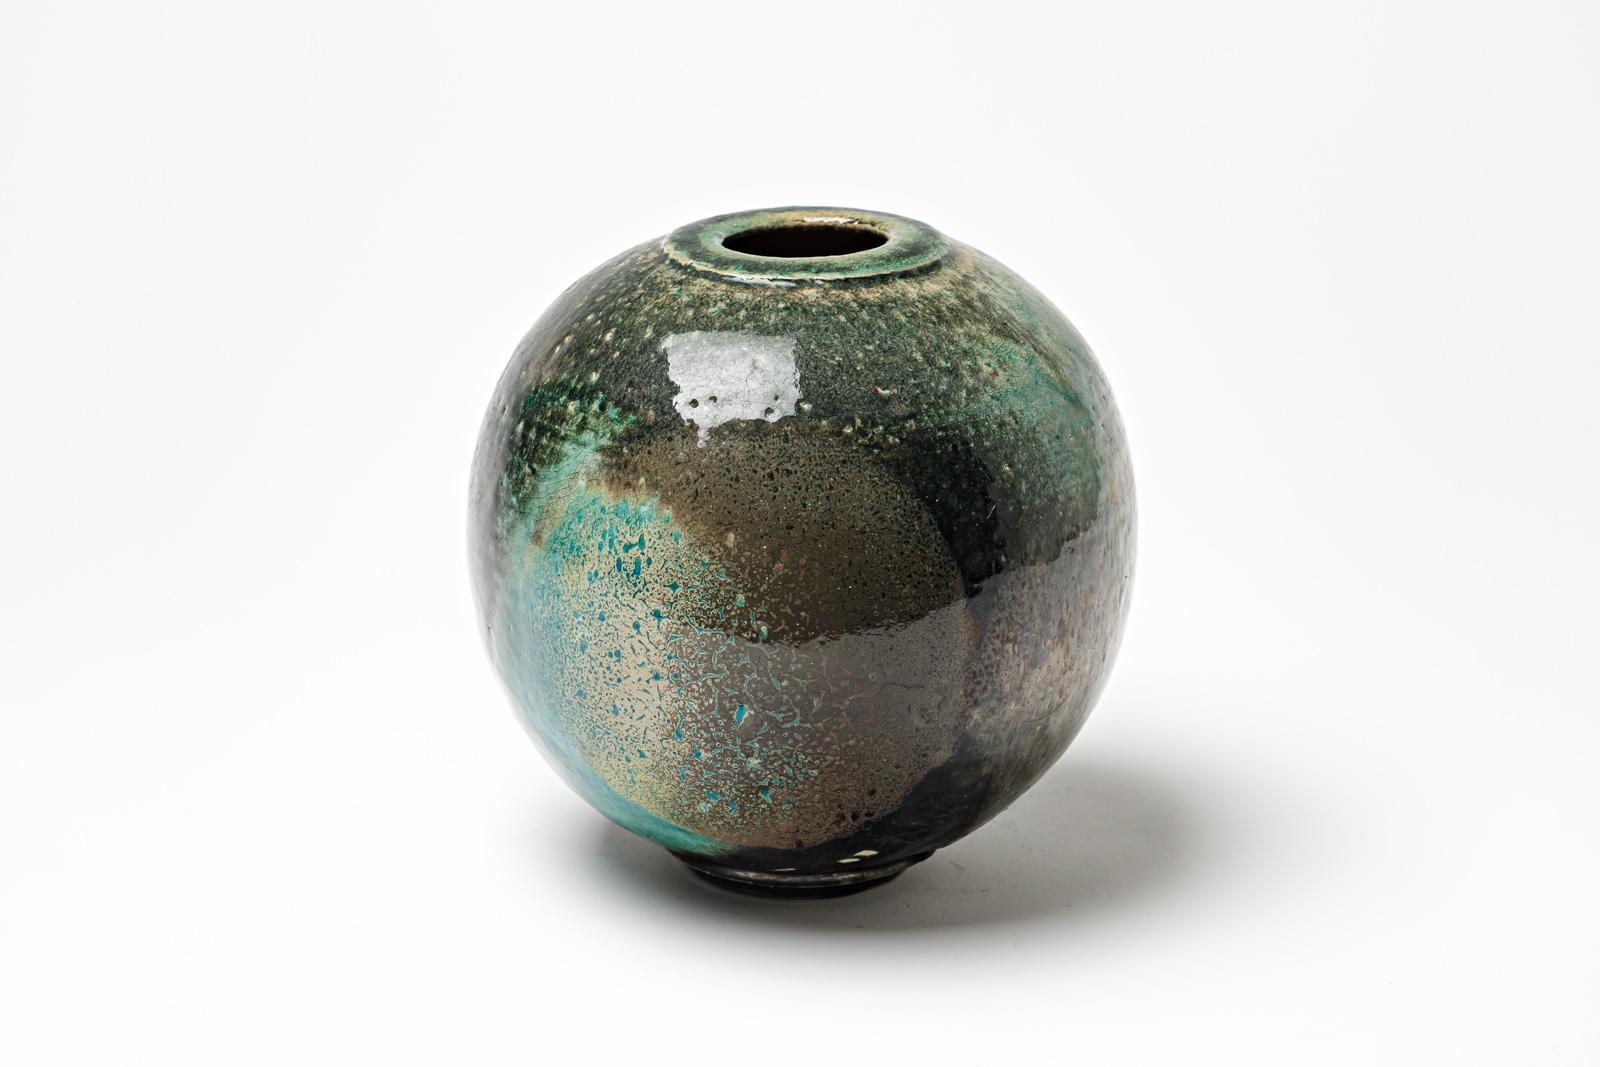 Blue/green and black glazed ceramic vase by Gisèle Buthod Garçon. 
Raku fired. Artist monogram under the base. Circa 1980-1990.
H : 7.5’ x 6.3’ inches.